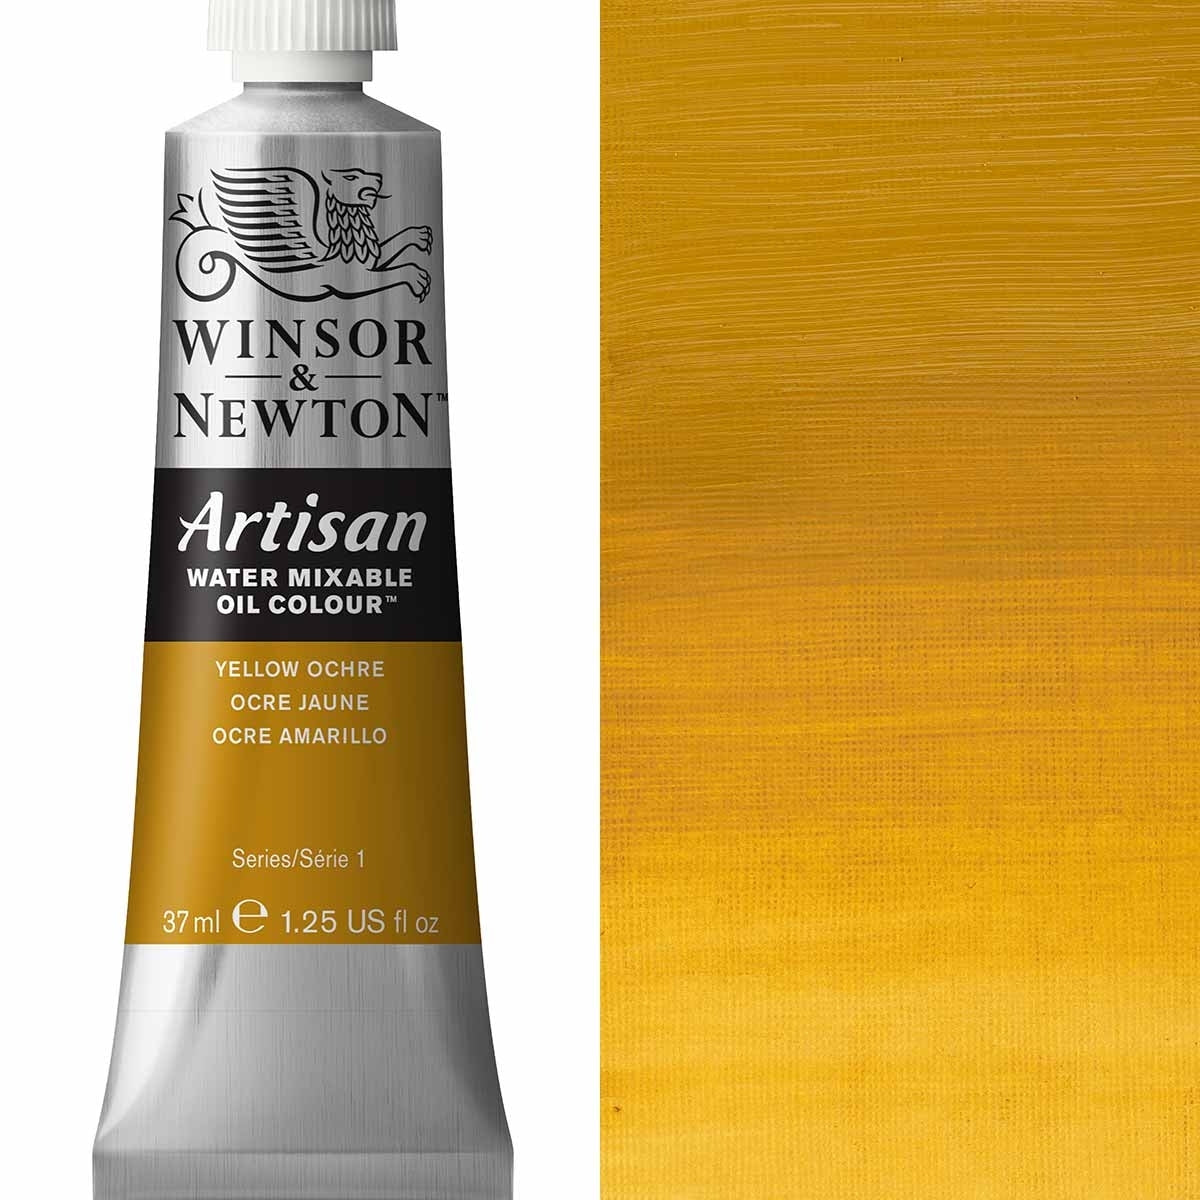 Winsor and Newton - Artisan Oil Colour Watermixable - 37ml - Yellow Ochre